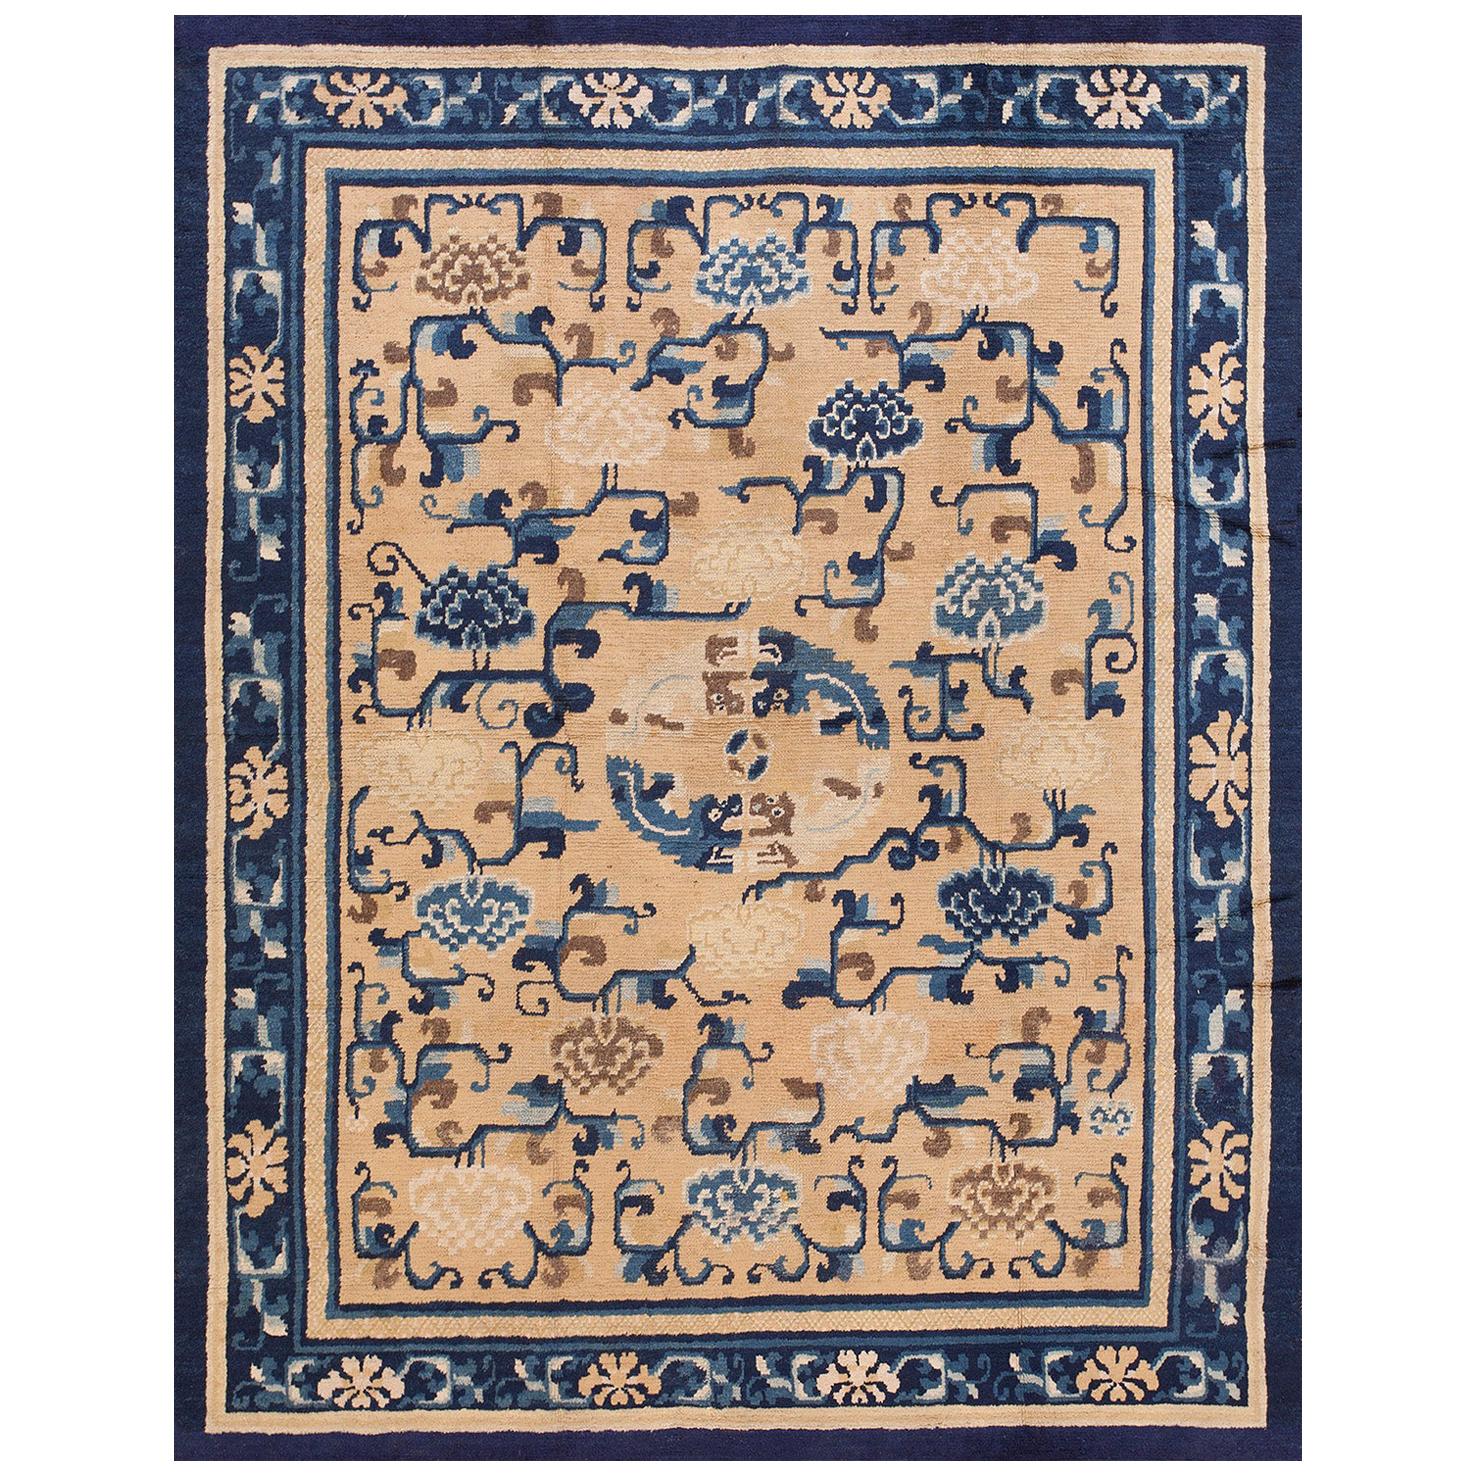 Antique Ningxia Chinese Carpet